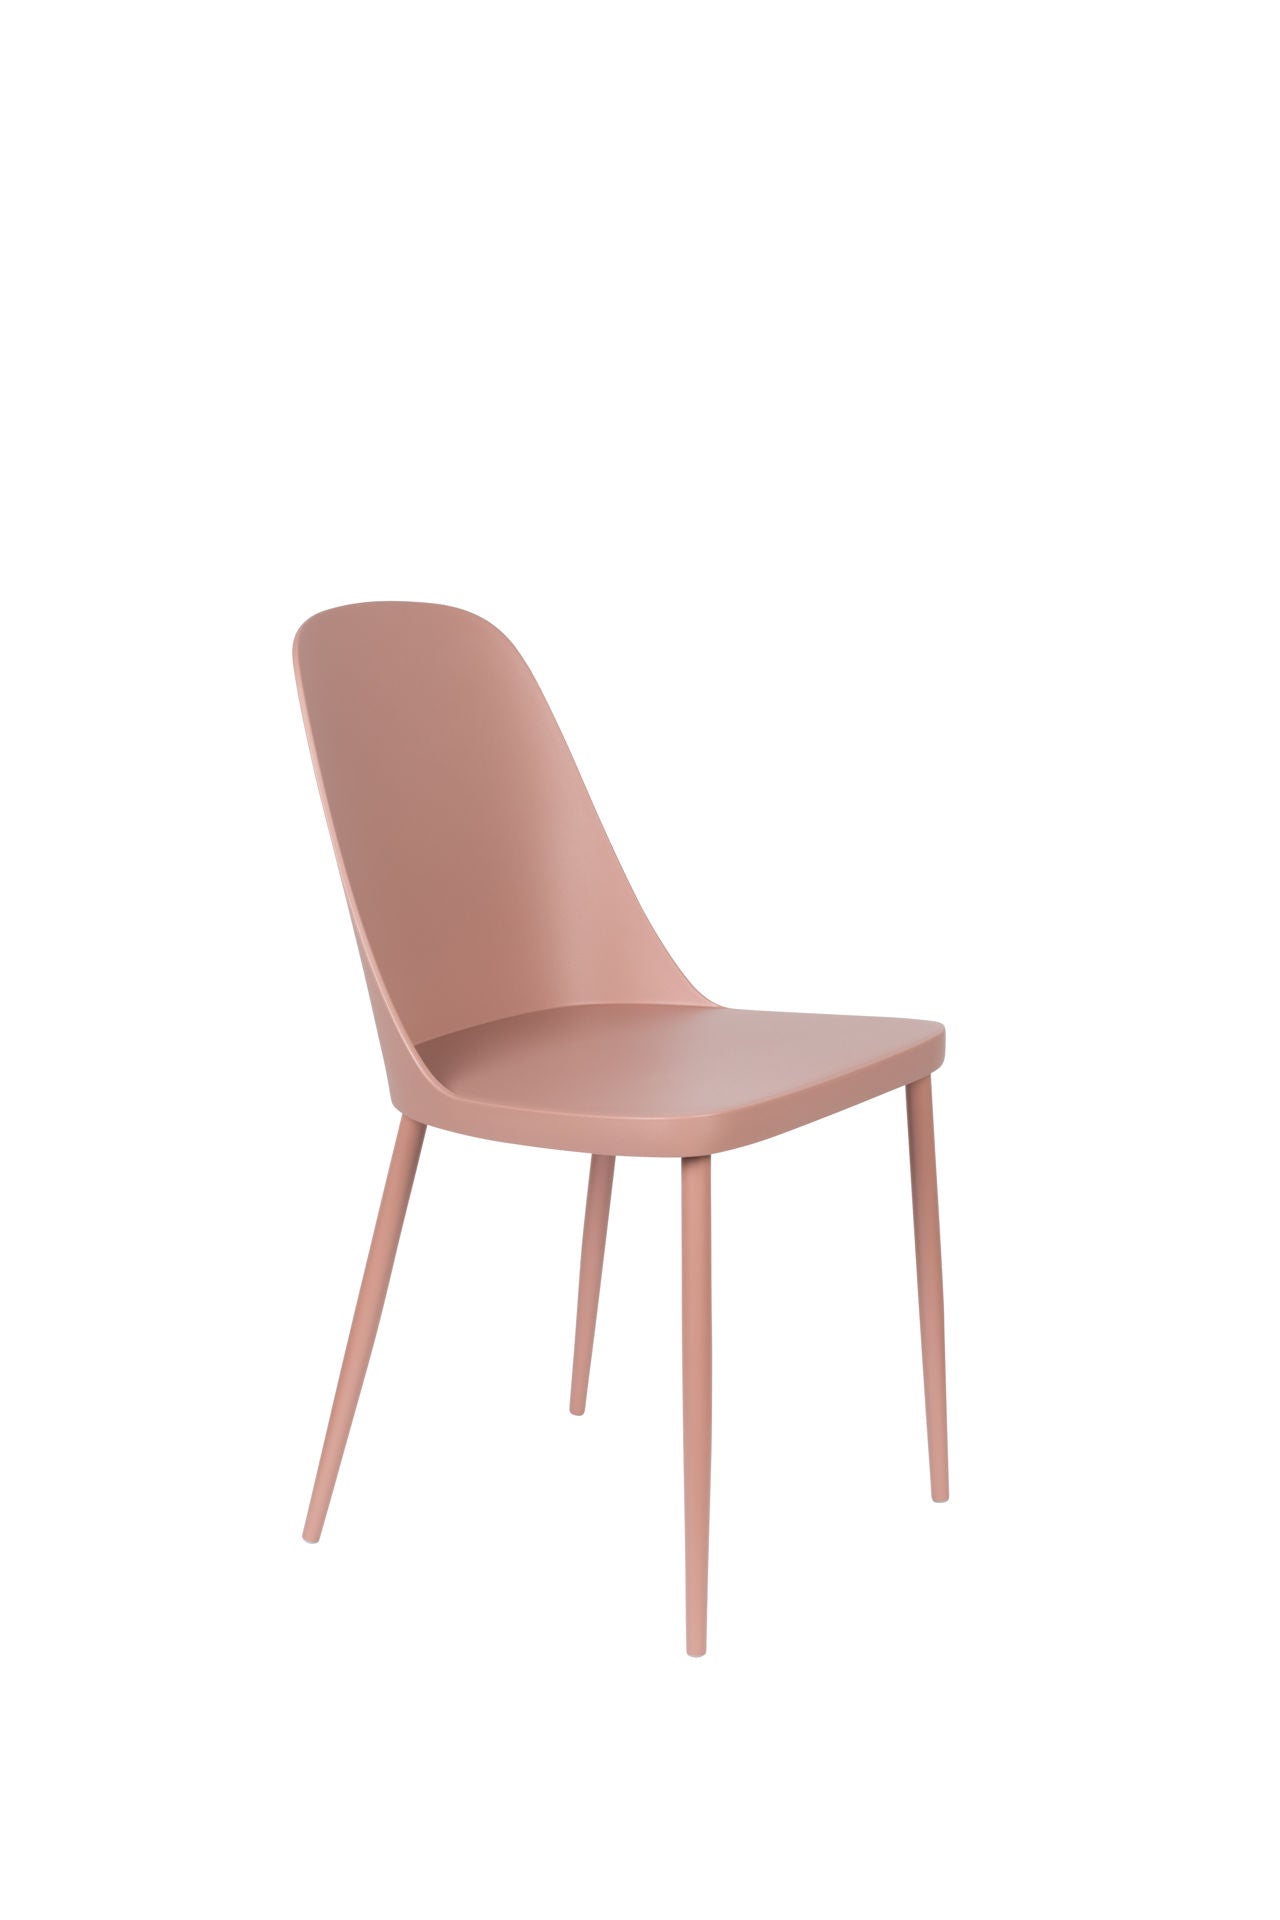 Nancy's Scott Chair - Scandinave - Rose - Polypropylène, Acier - 53,5 cm x 46 cm x 85 cm